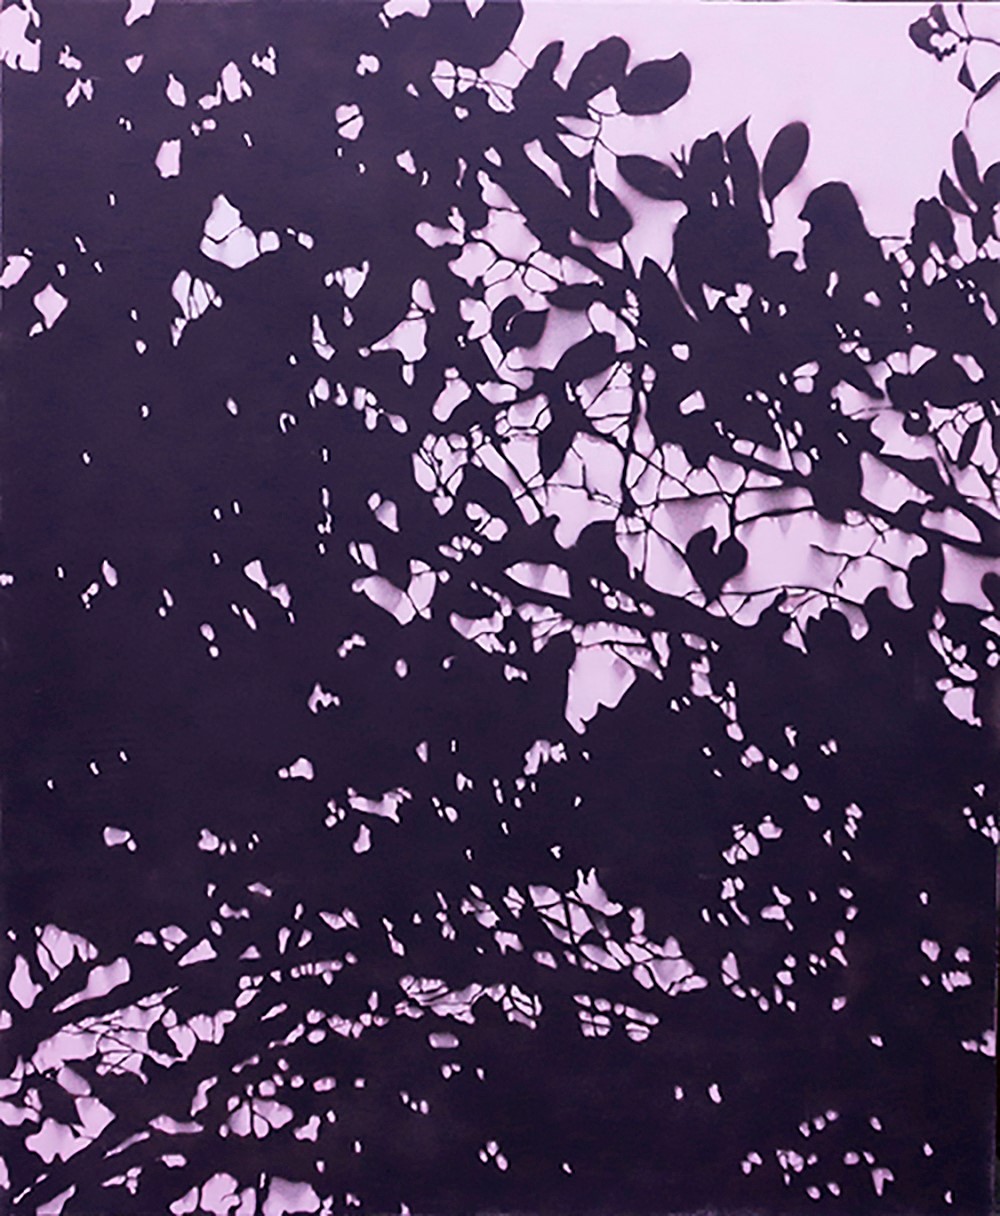 Mark Hislop Phototrope 3 acrylic on canvas 167 x 137cm $9,900